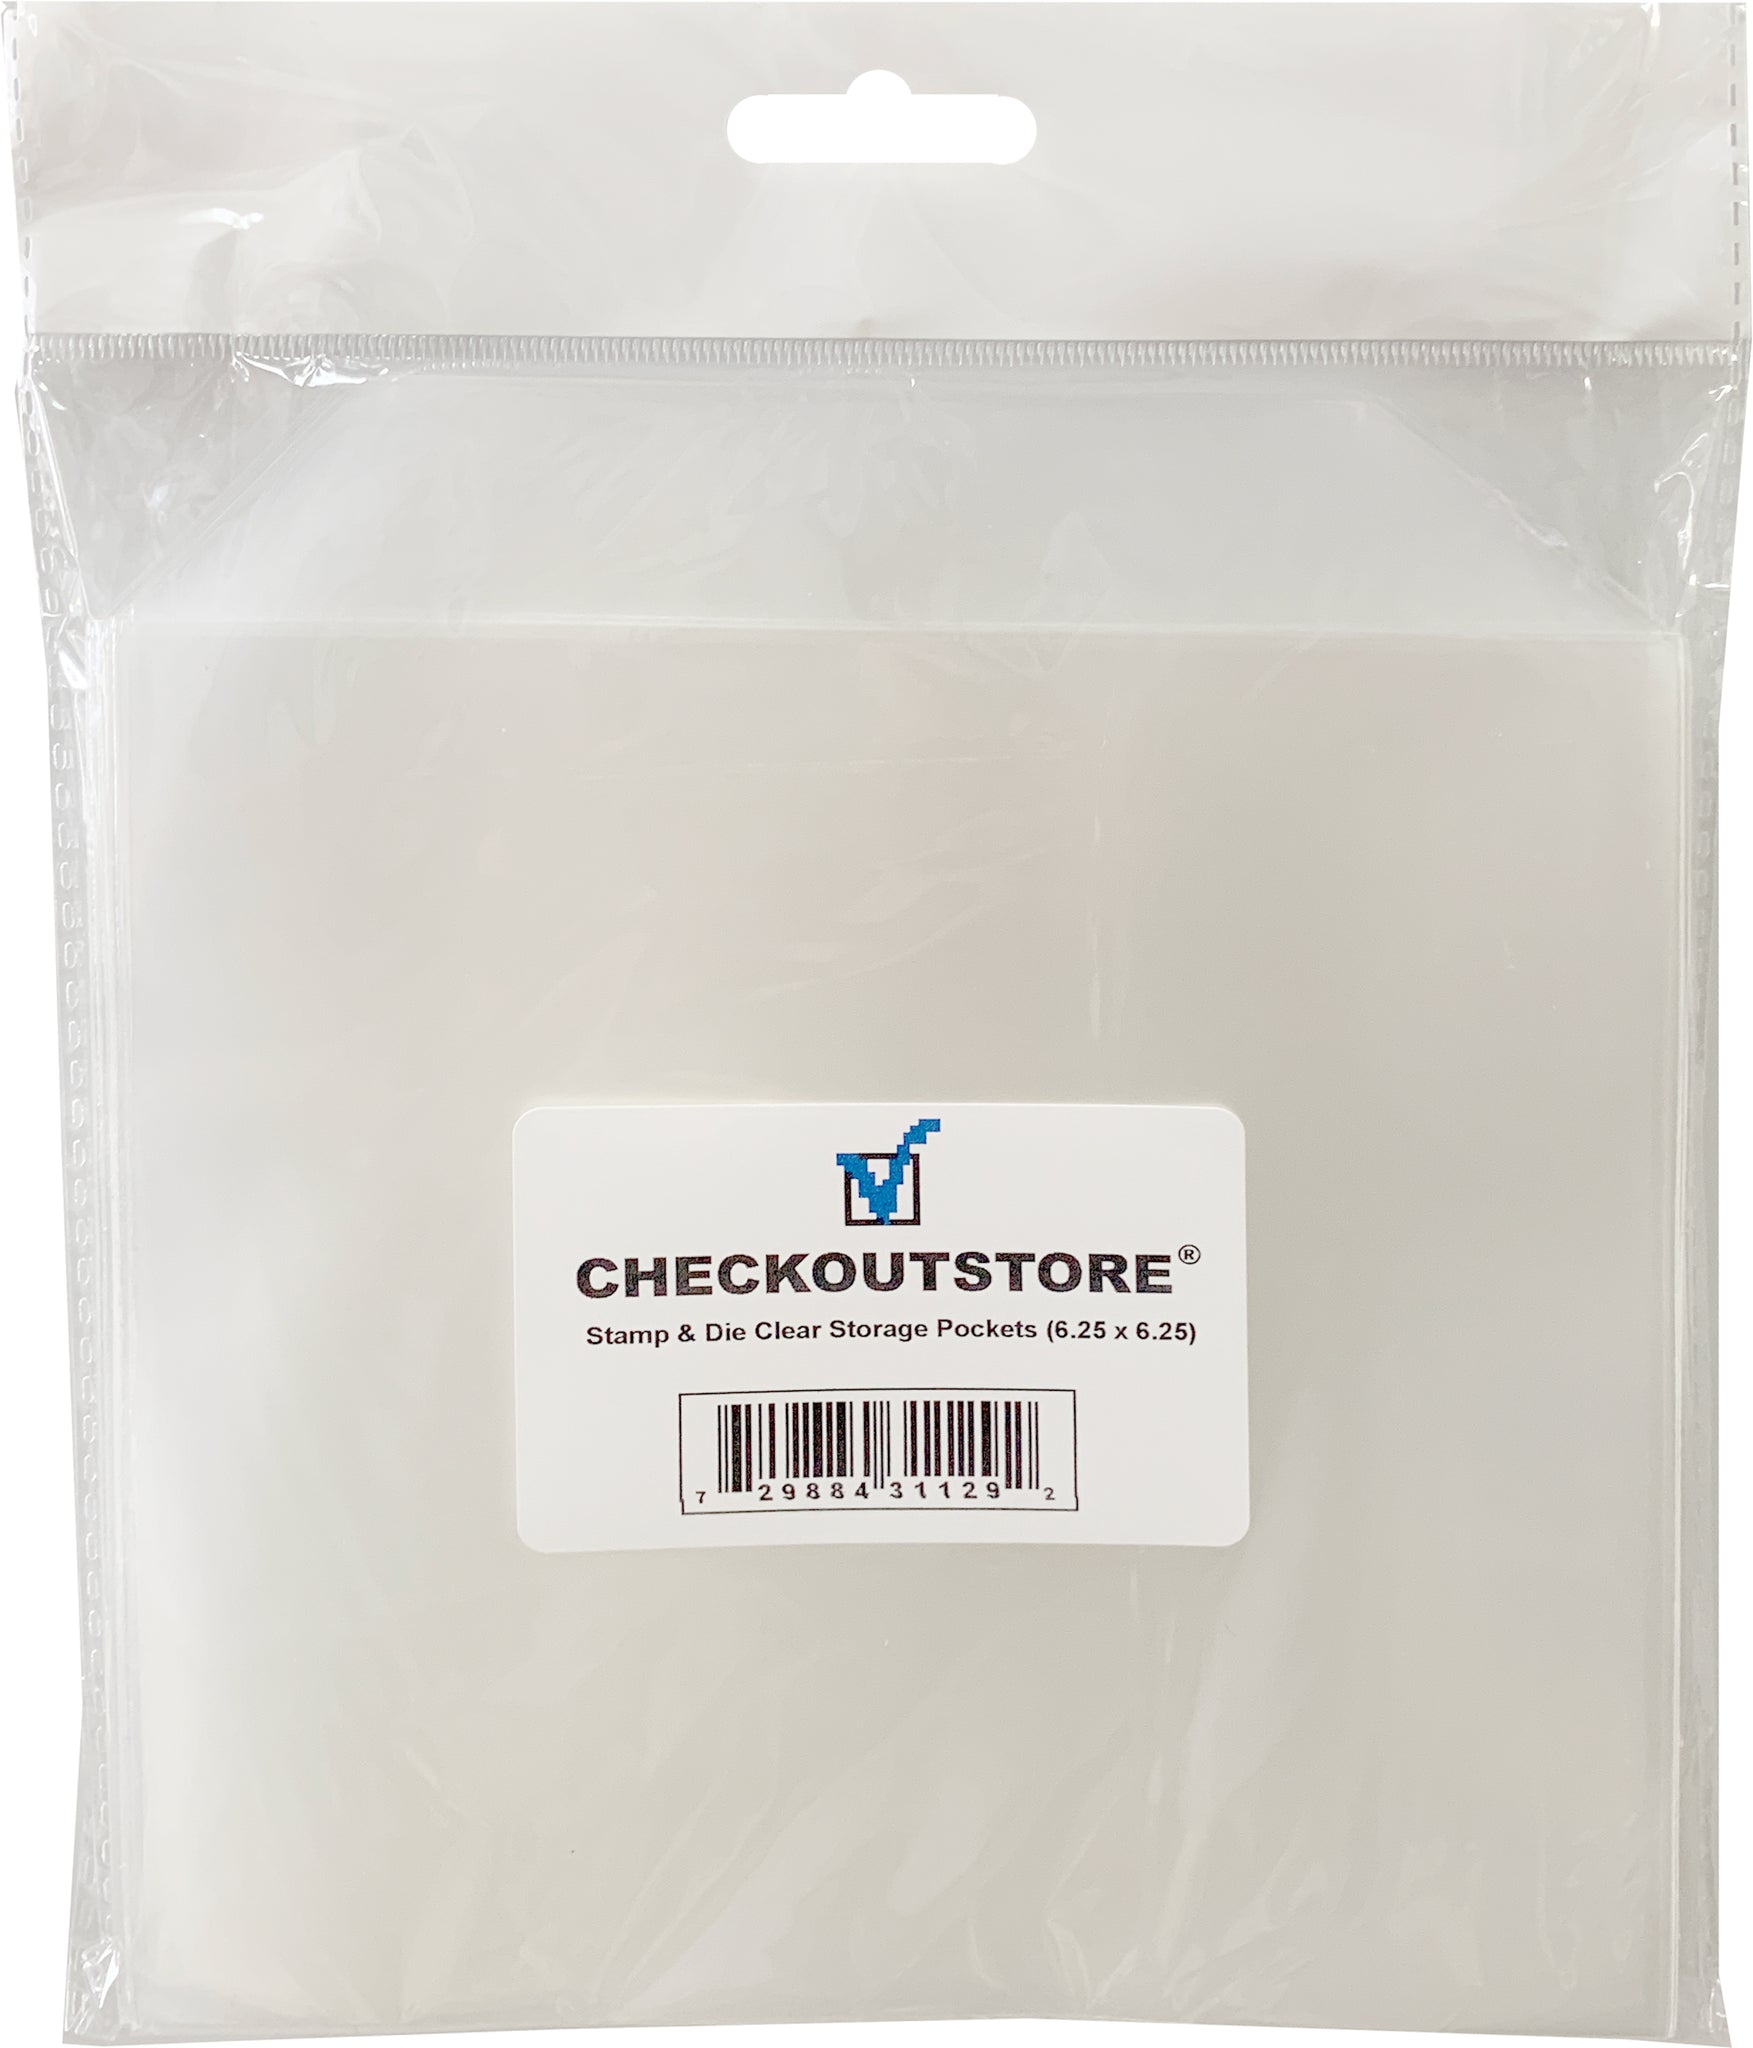 100 CheckOutStore® Clear Storage Pockets (6.25 x 6.25)